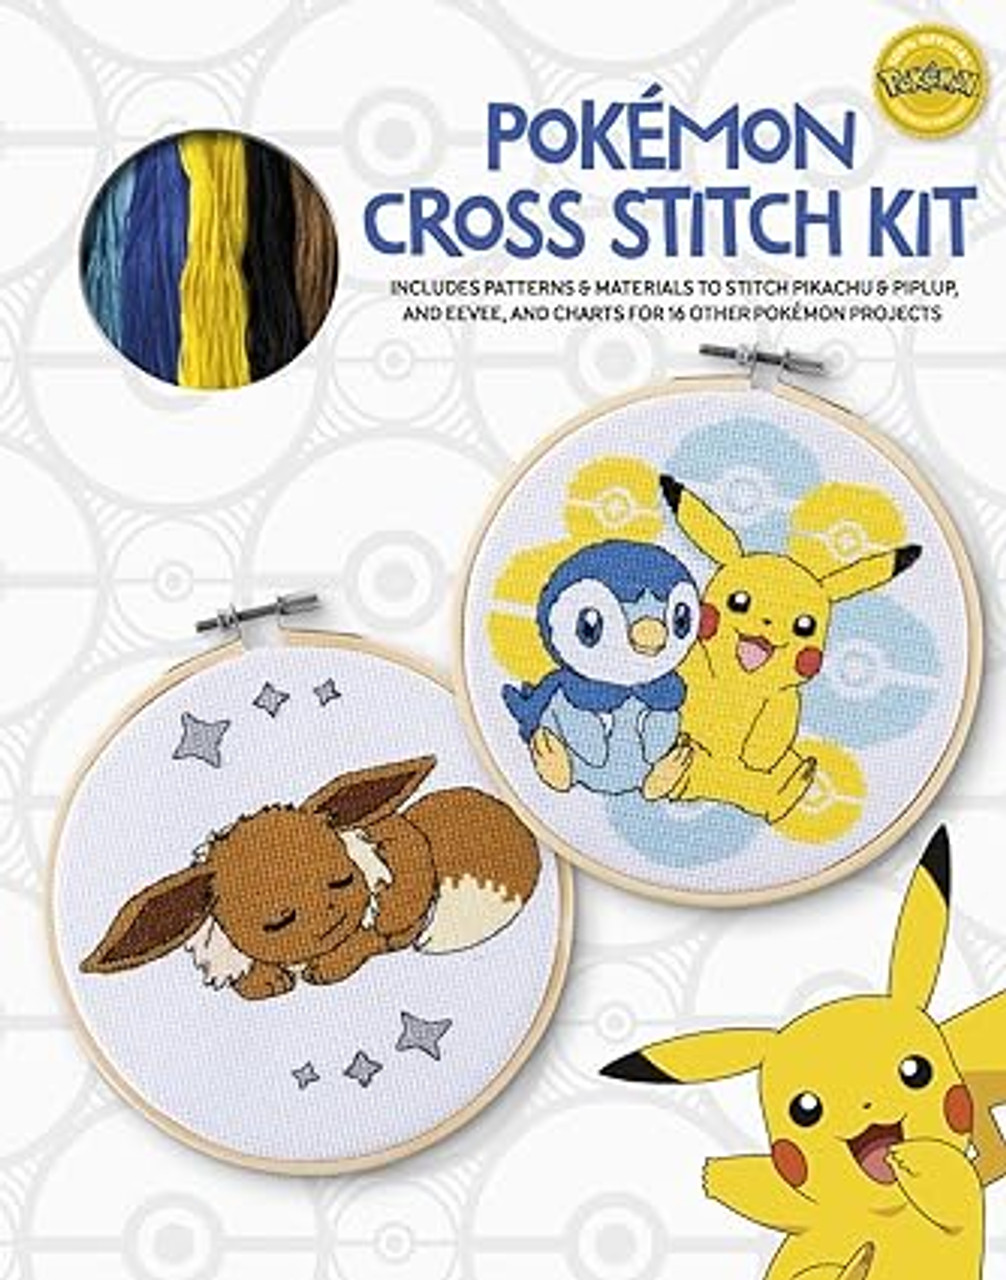 Cross Stitch Patterns, Cross Stitch Booklets